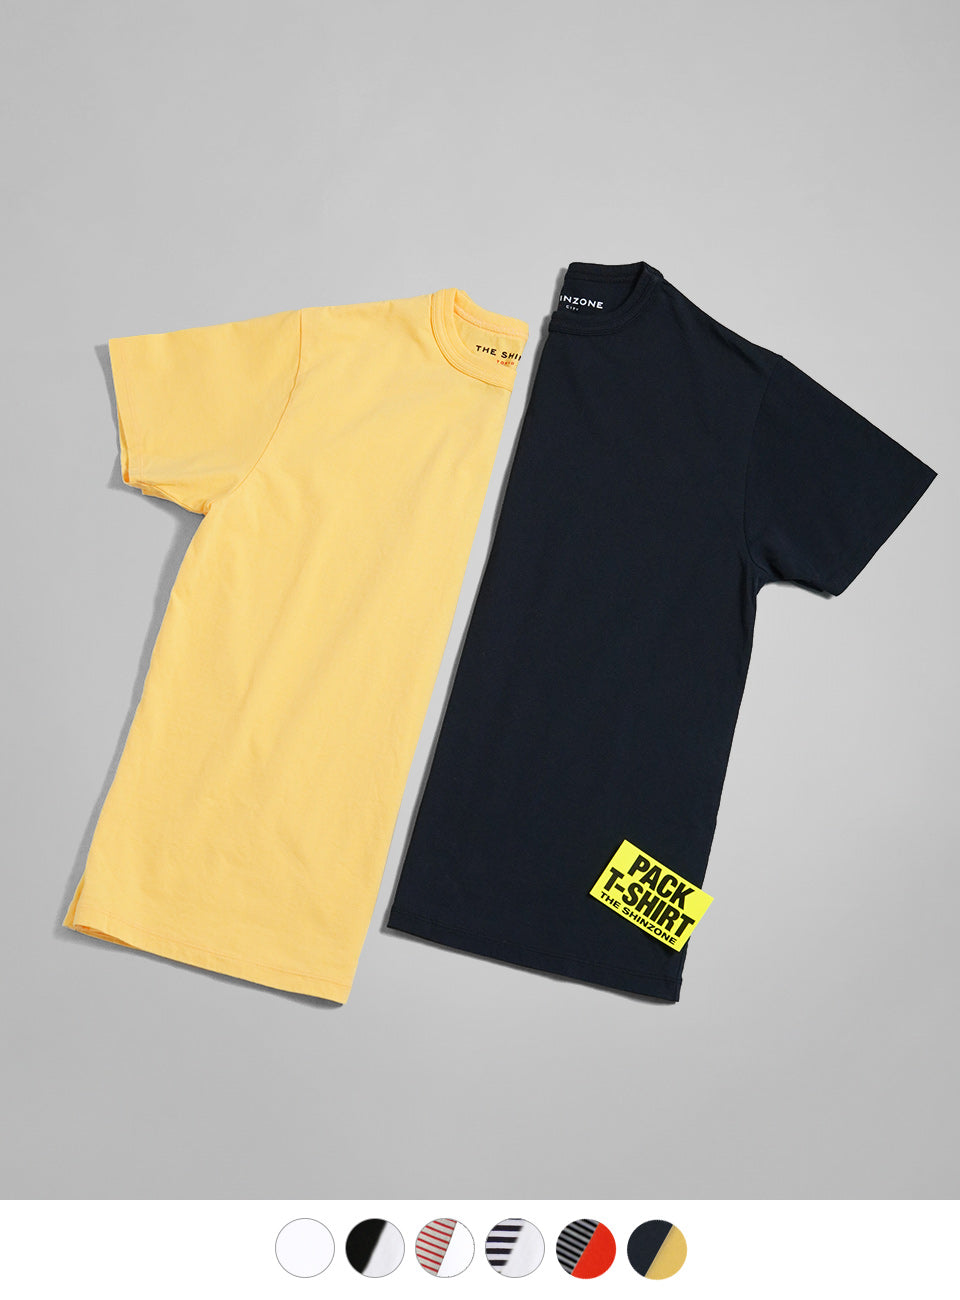 THE SHINZONE シンゾーン パック Tシャツ PACK TEE 2枚入り 20SMSCU66【送料無料】【クーポン対象外】